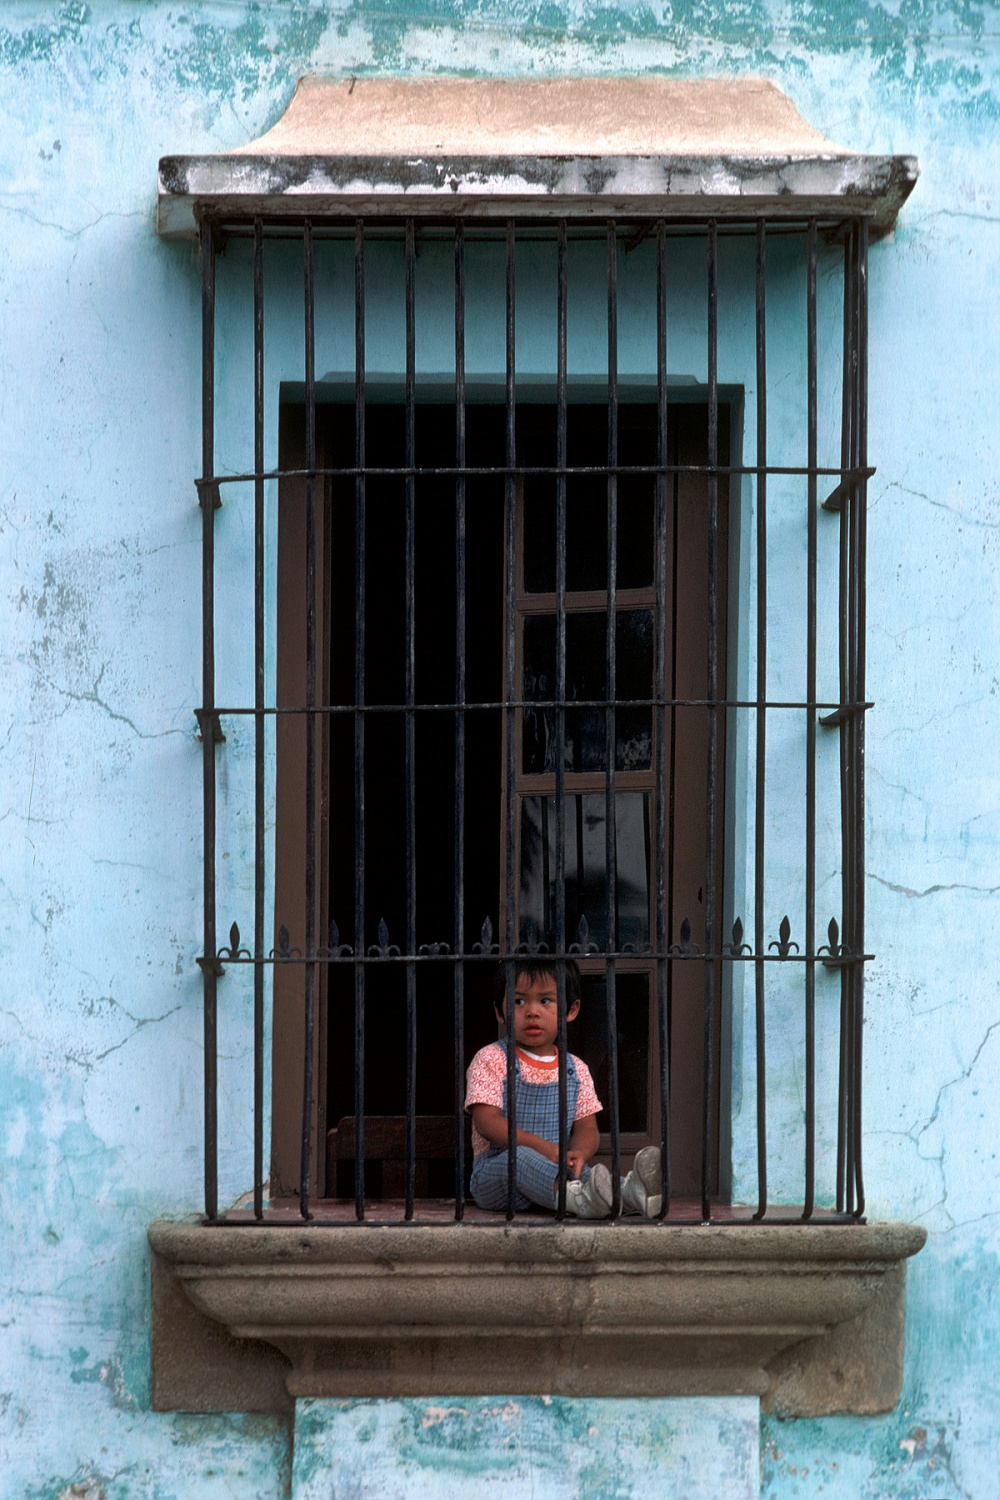 bill-hocker-window-seat-antigua-guatemala-1978